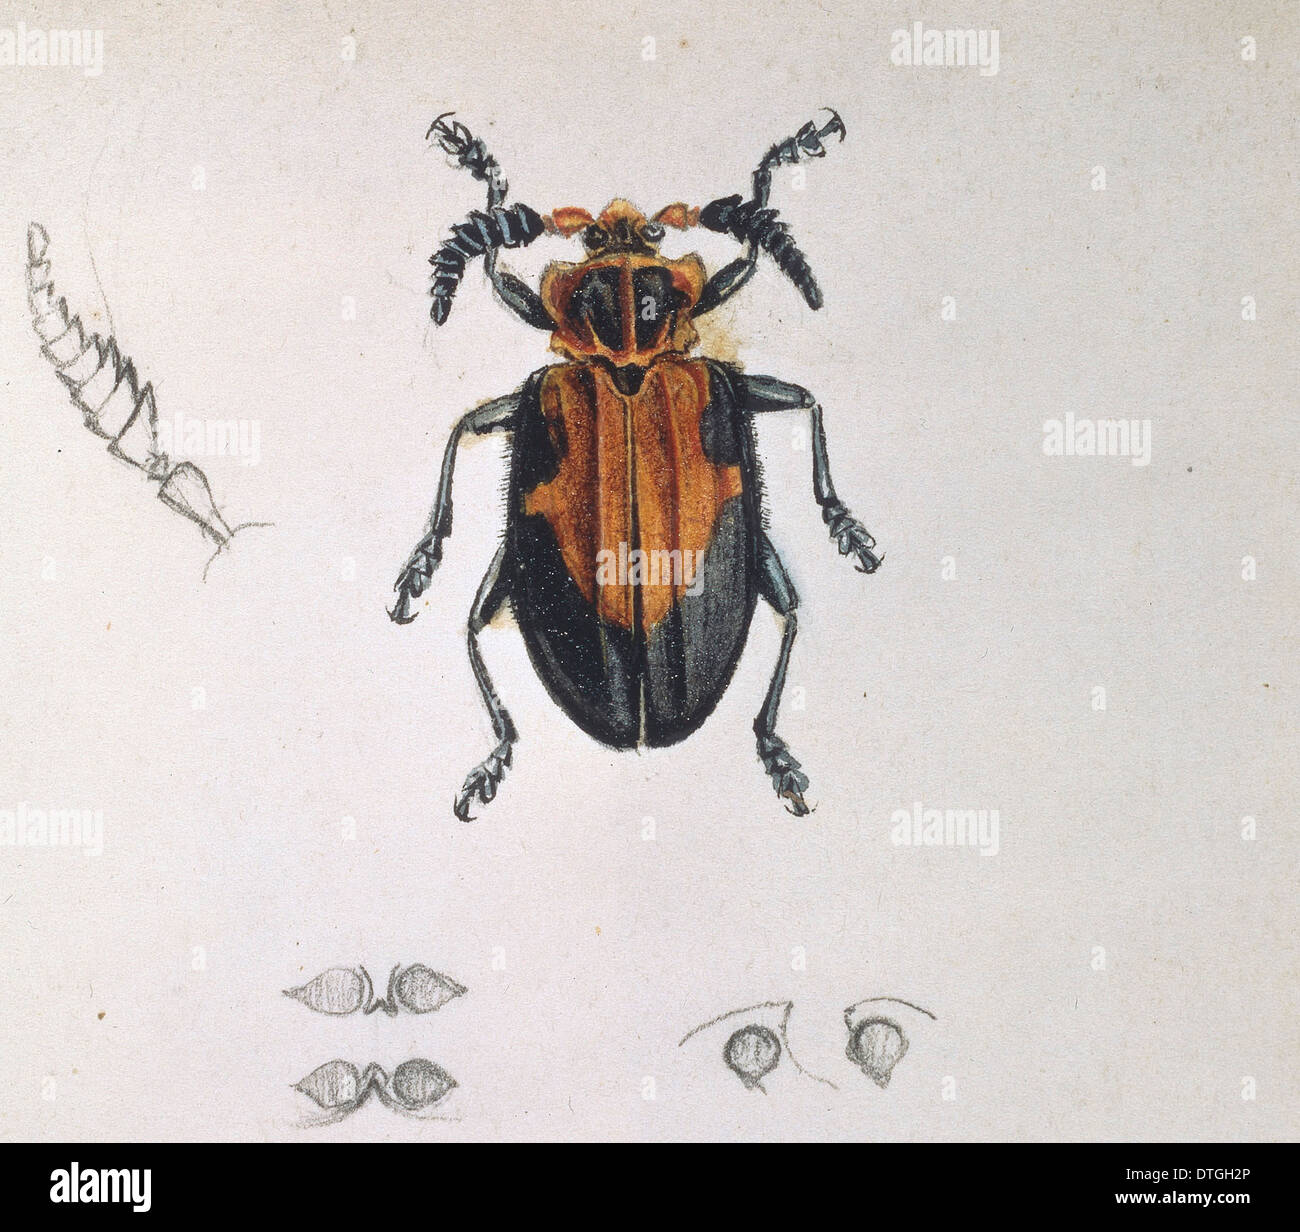 Longhorn beetle Stock Photo